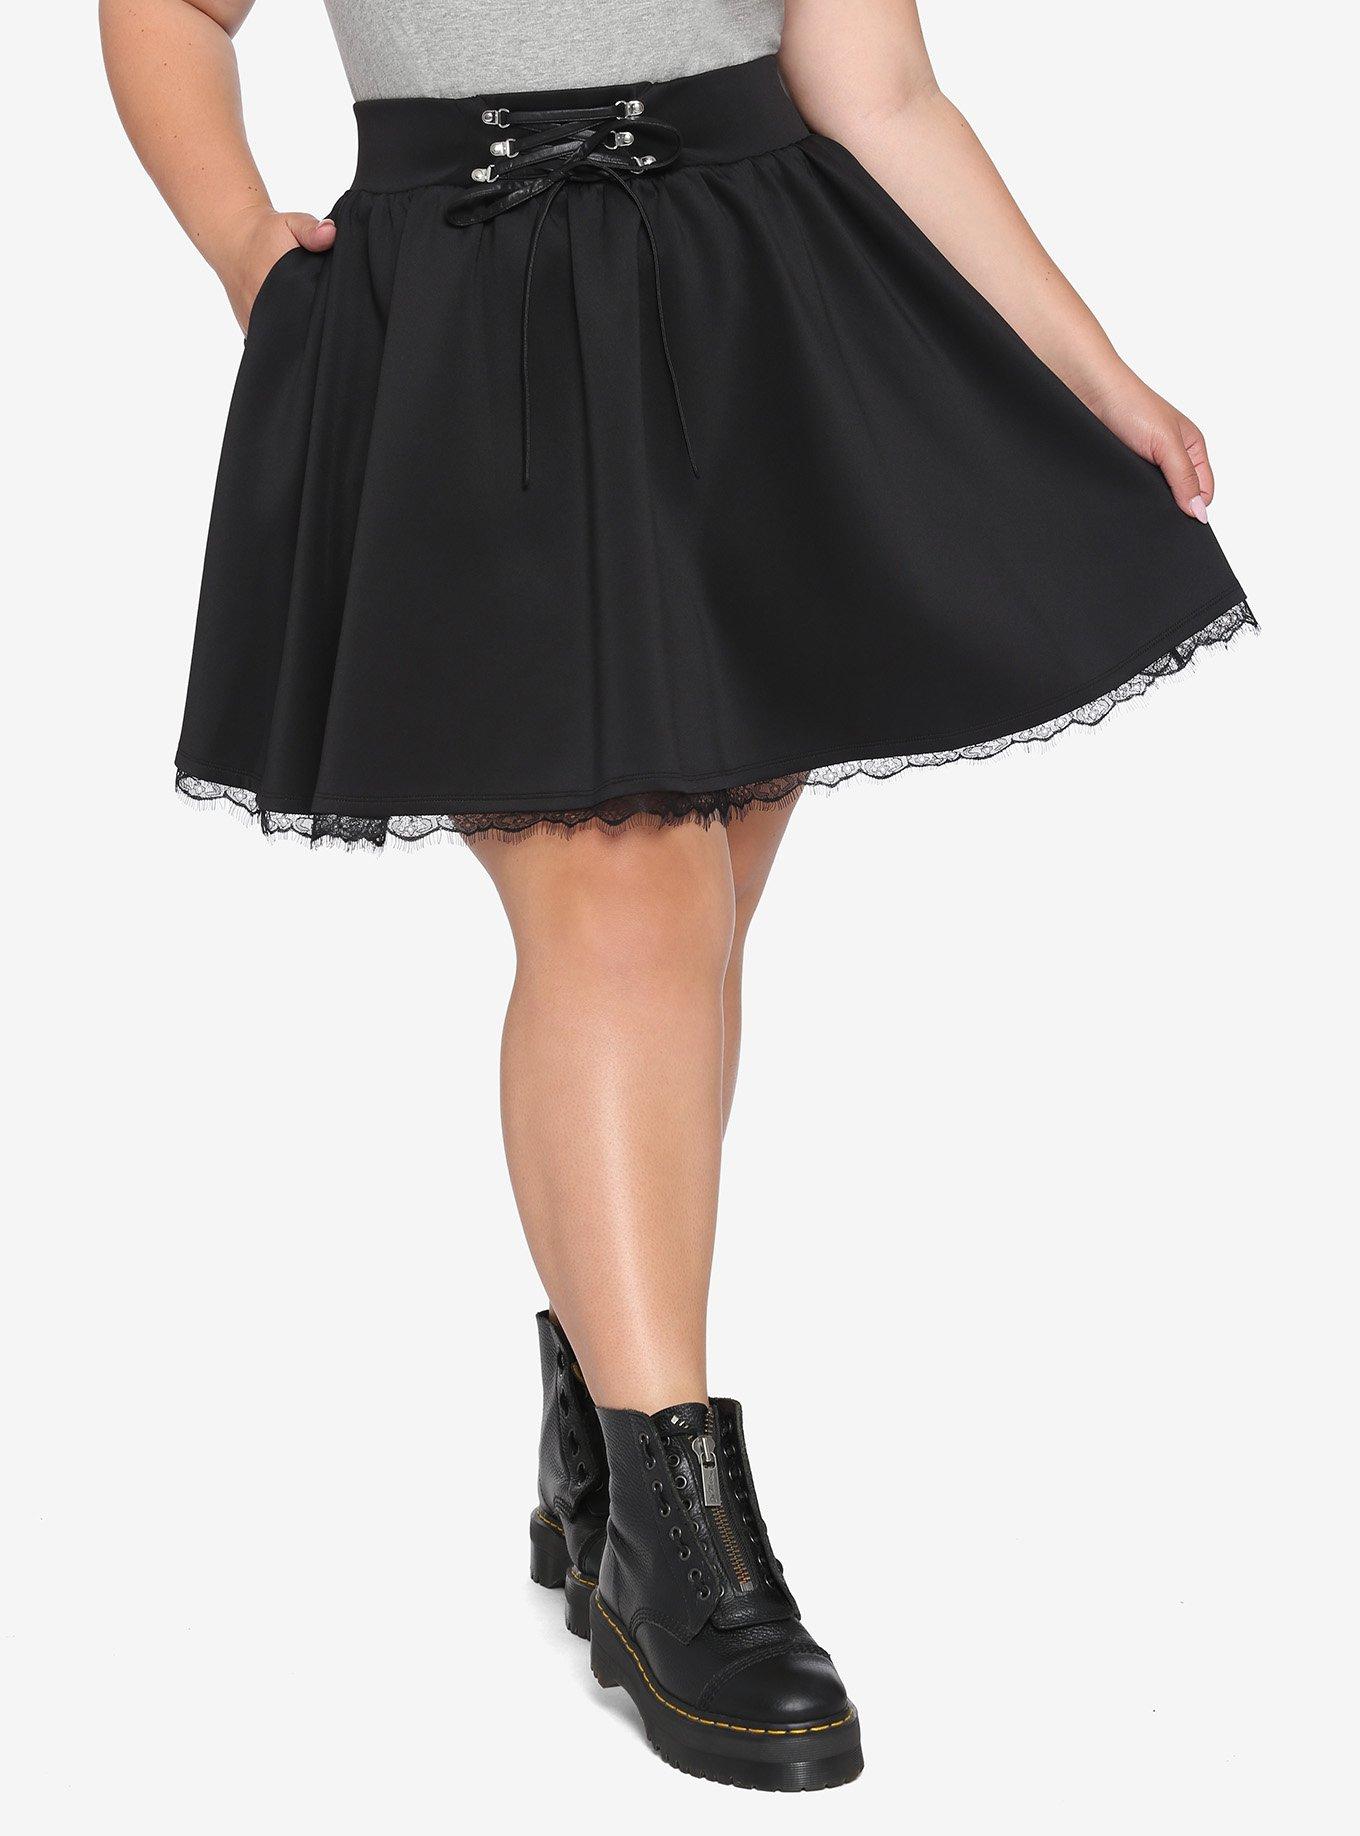 Black Lace-Up Skater Skirt Plus Size, BLACK, hi-res